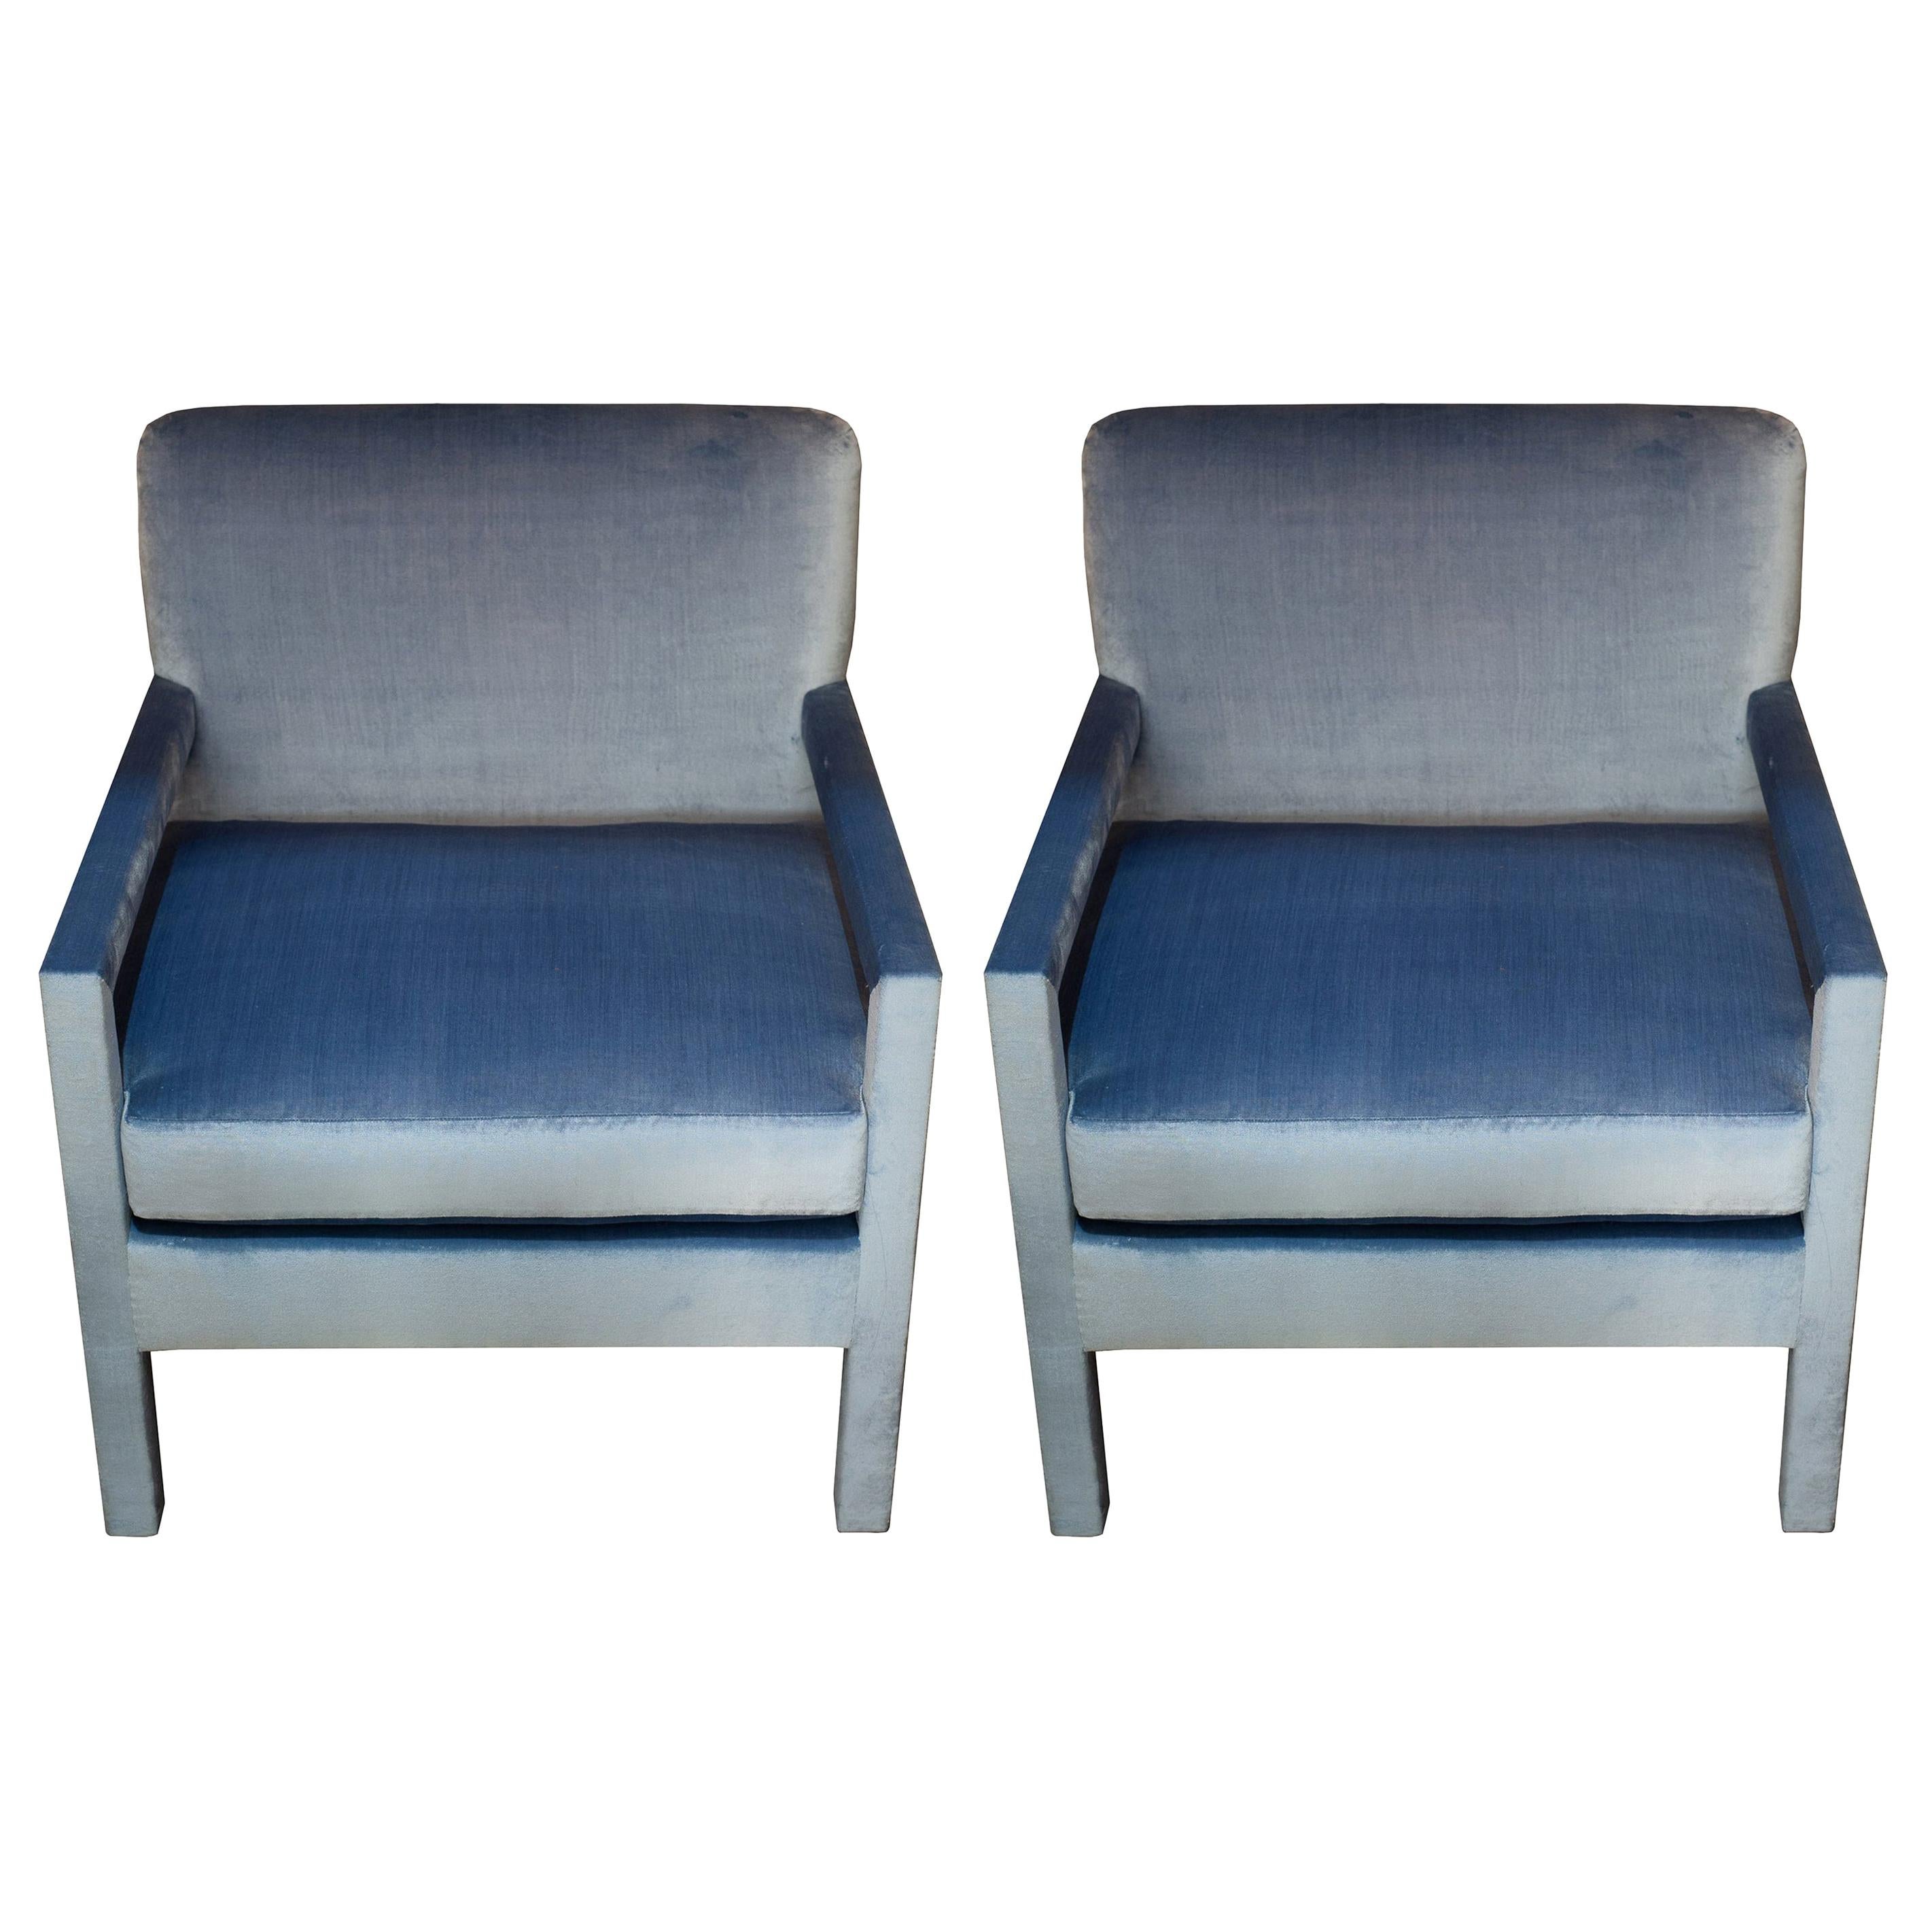 Studio Maison Nurita Parsons Chairs in Delft Blue Silk Velvet